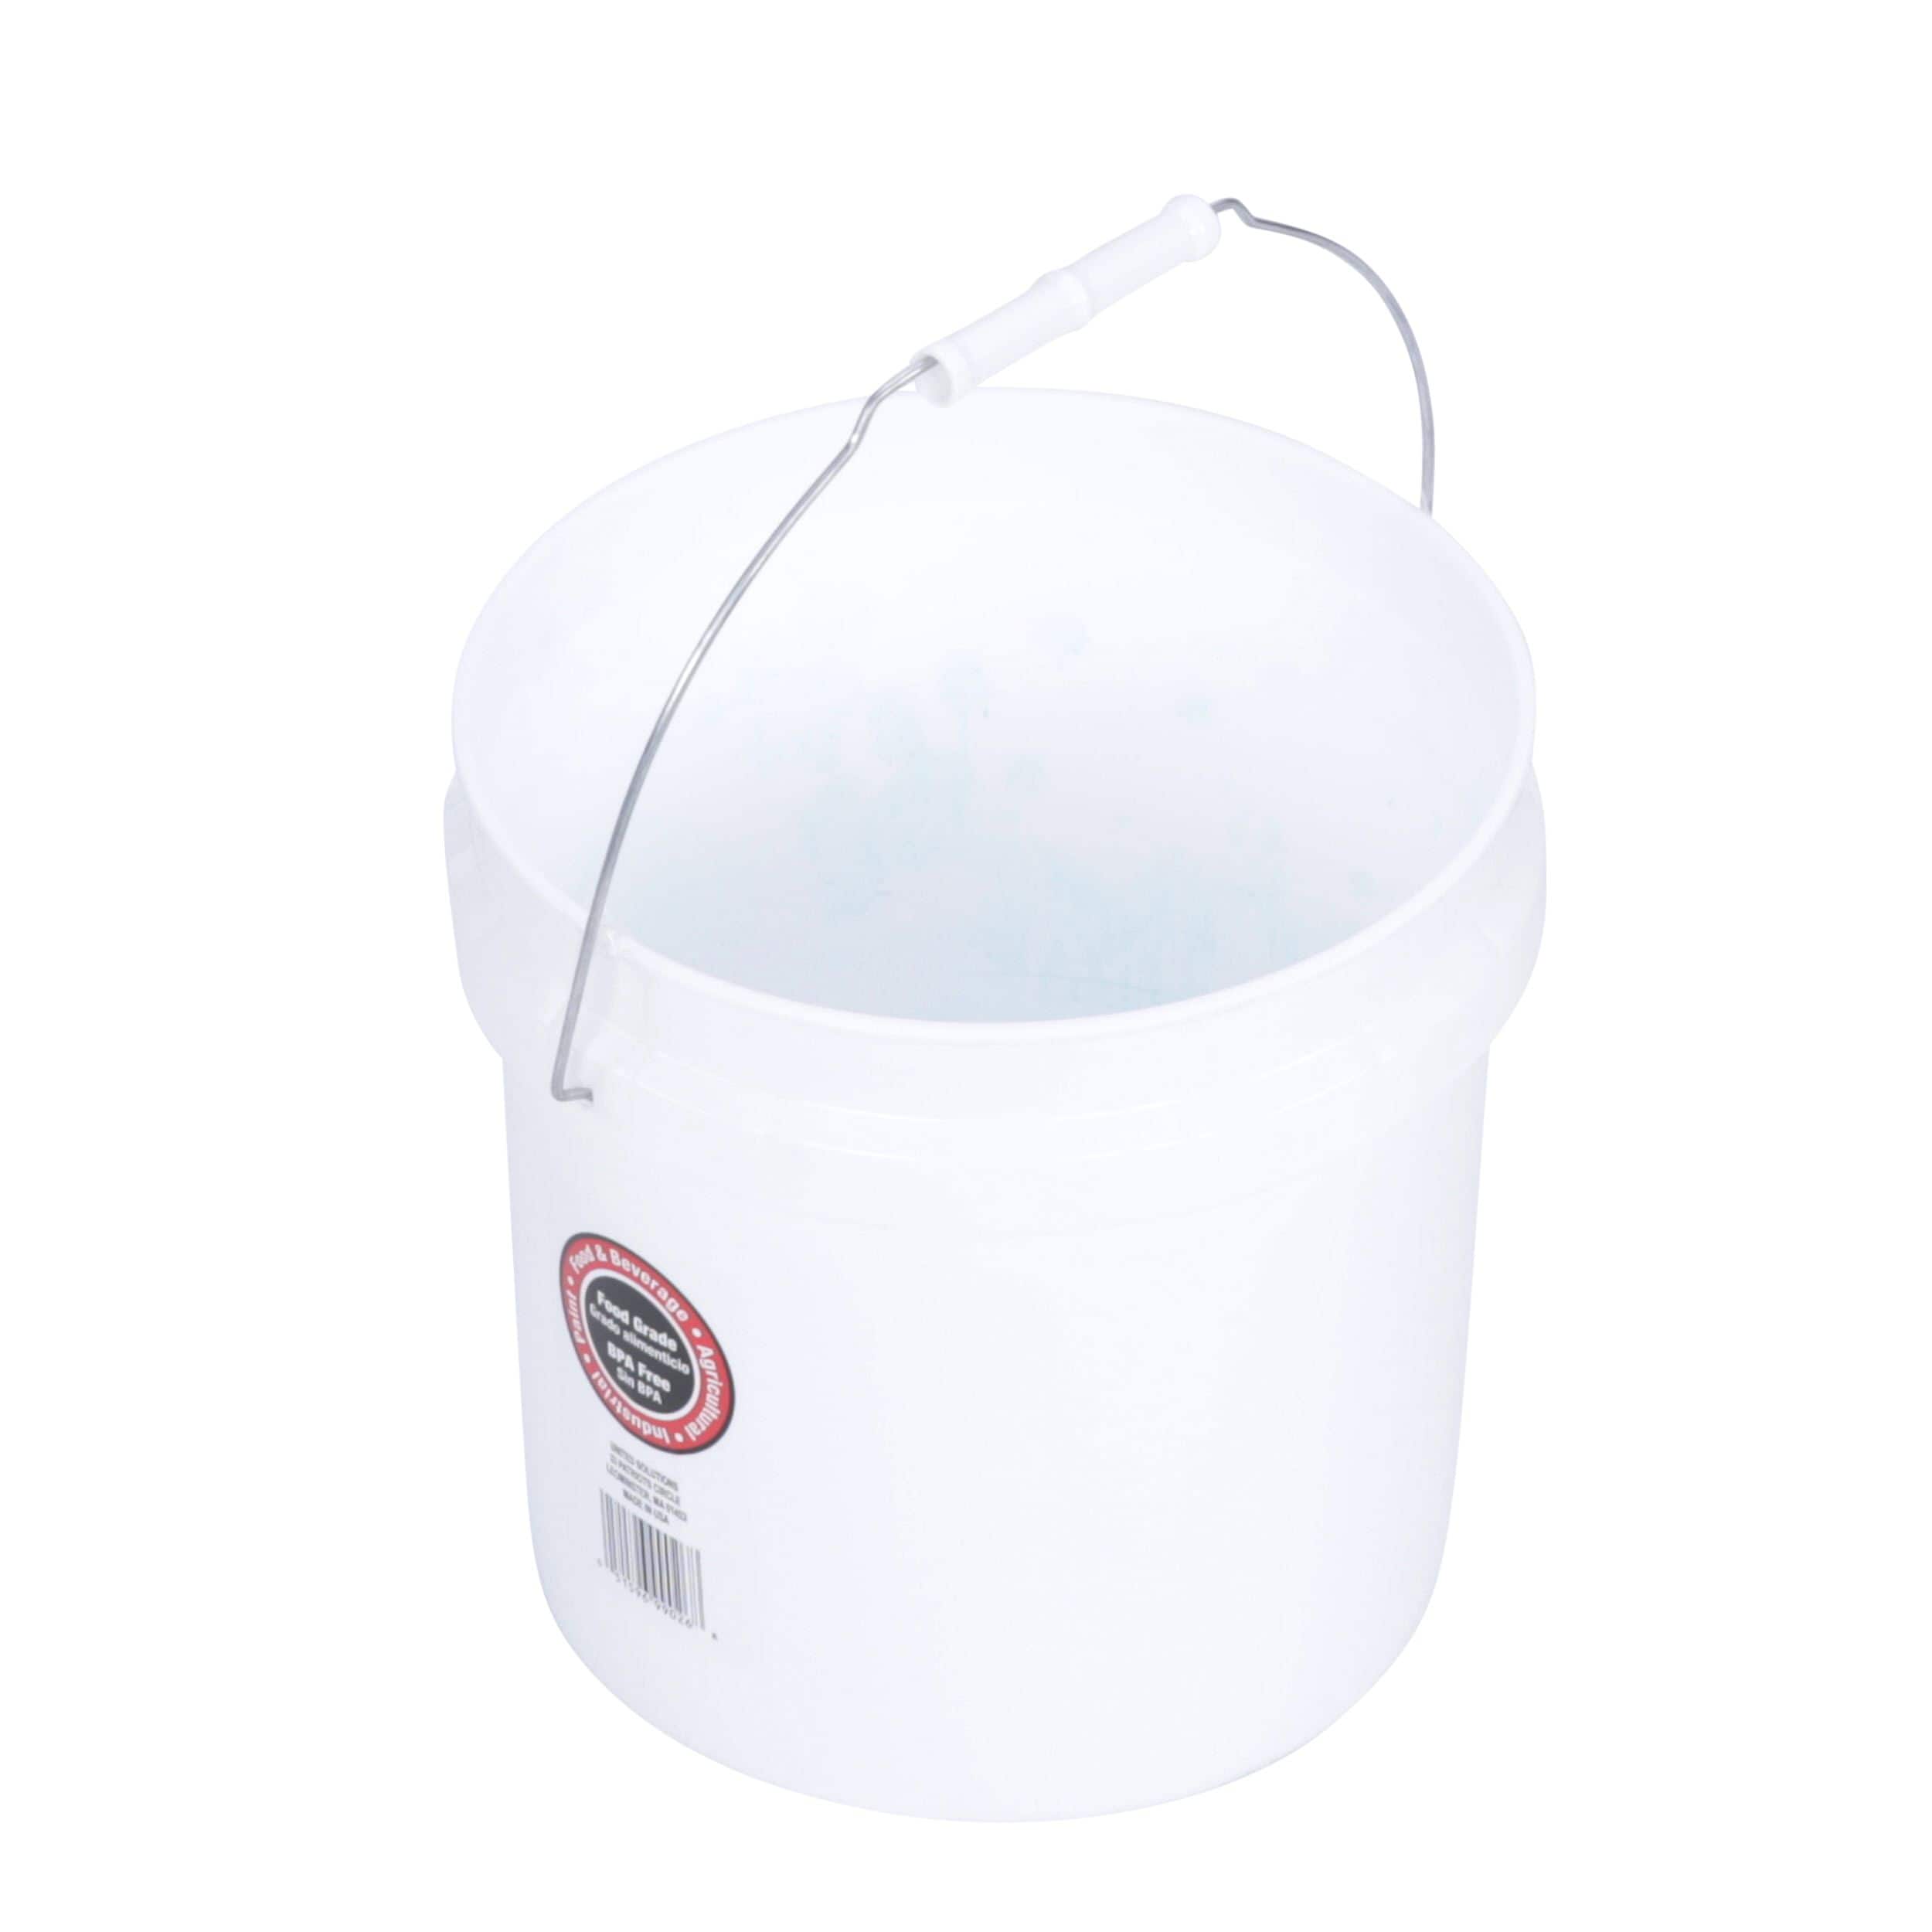 United Solutions 2-Gallon (s) Food-grade Plastic General Bucket in